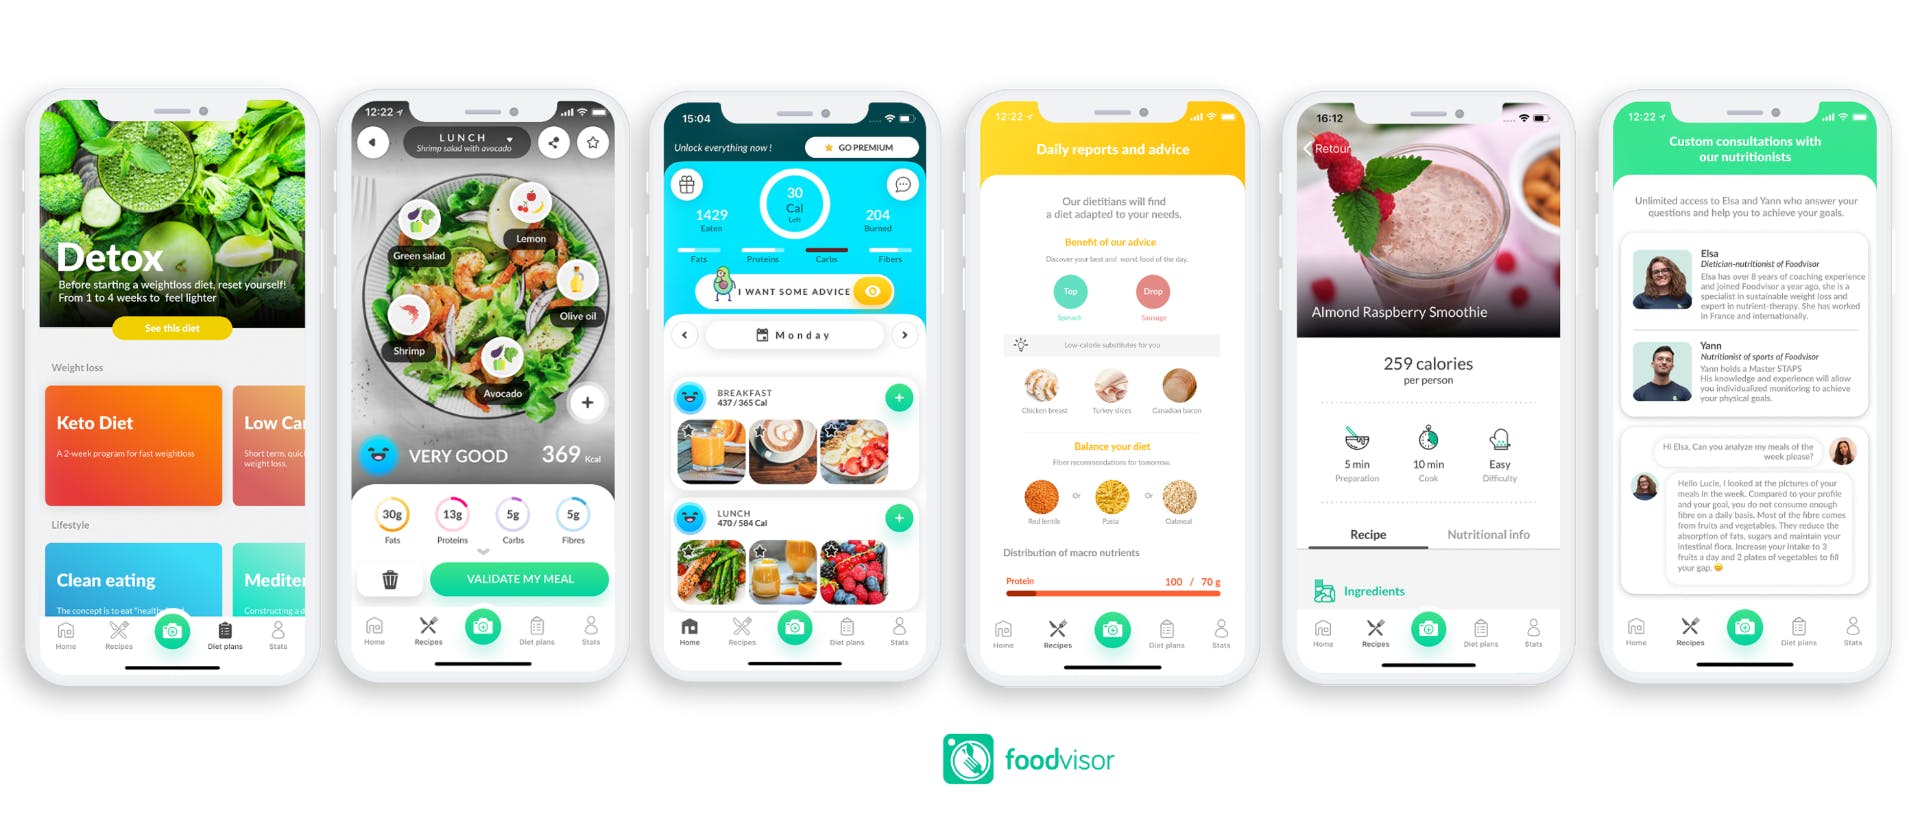 Foodvisor app